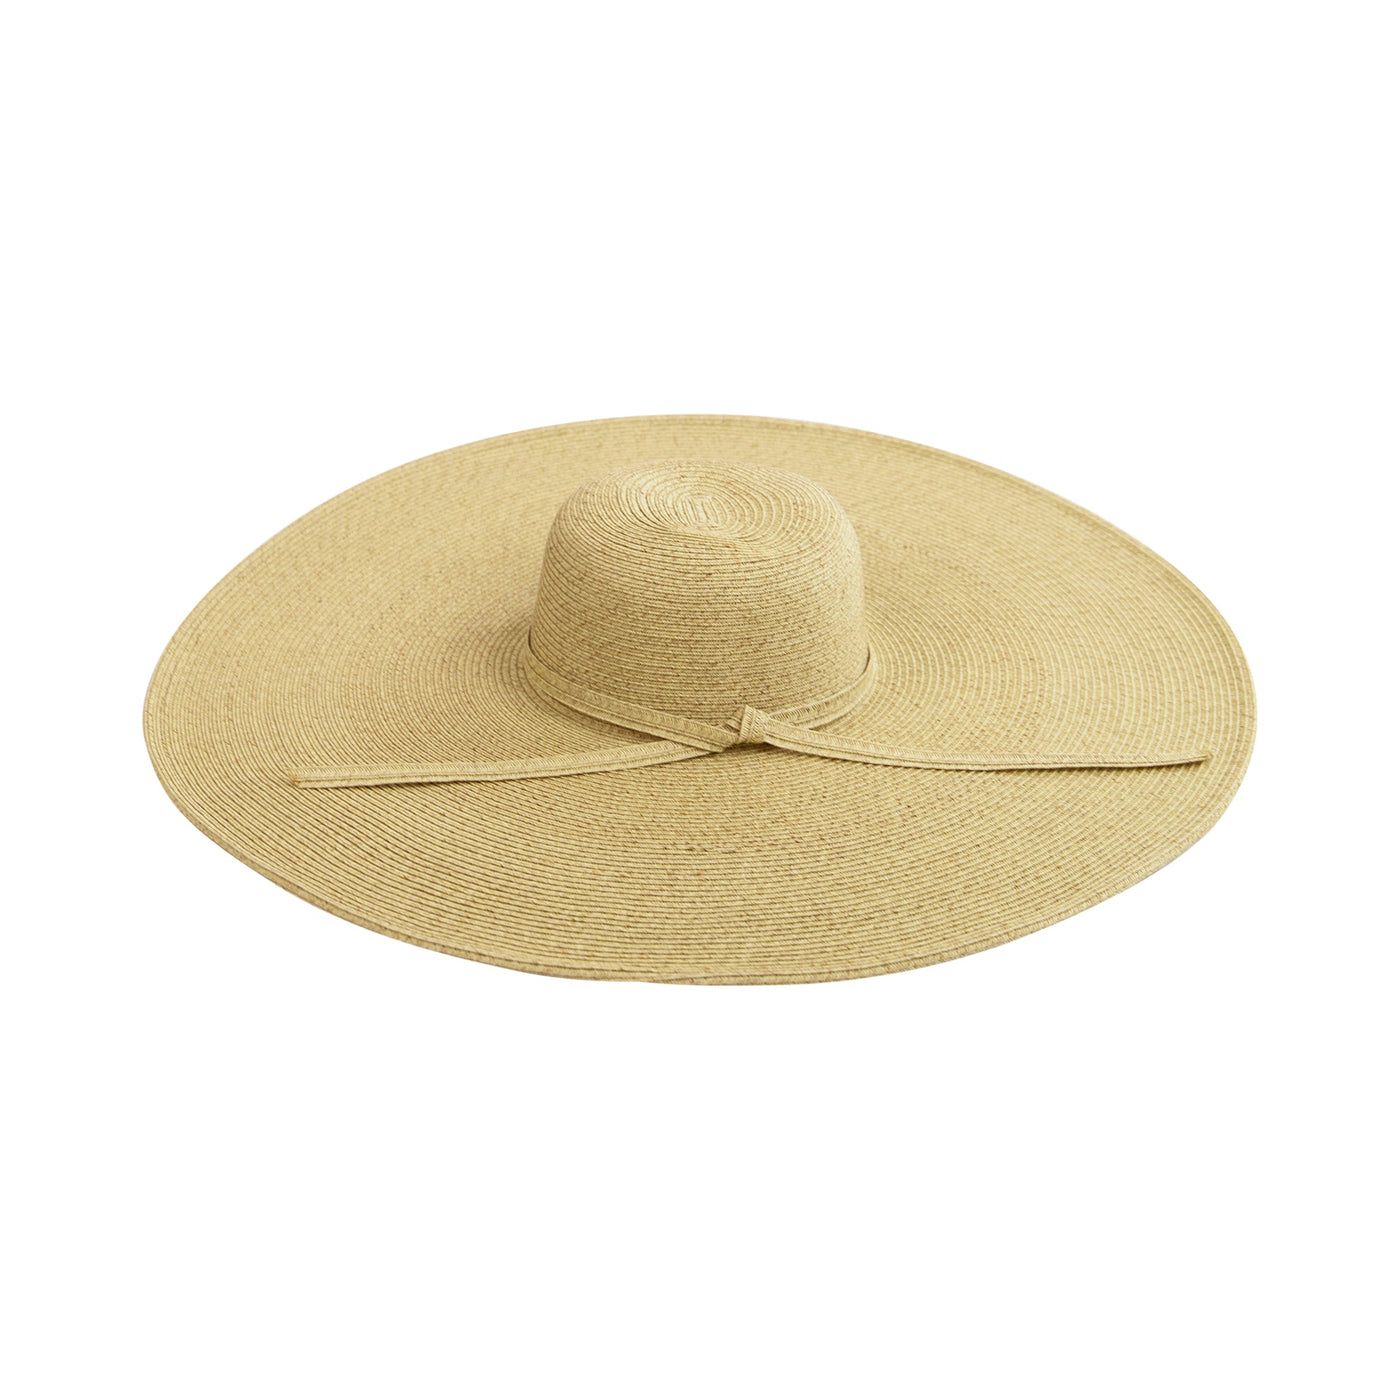 Large Brim Sun Hat / 5 Inch Brim Tan Sun Hat / Medium Extra Large